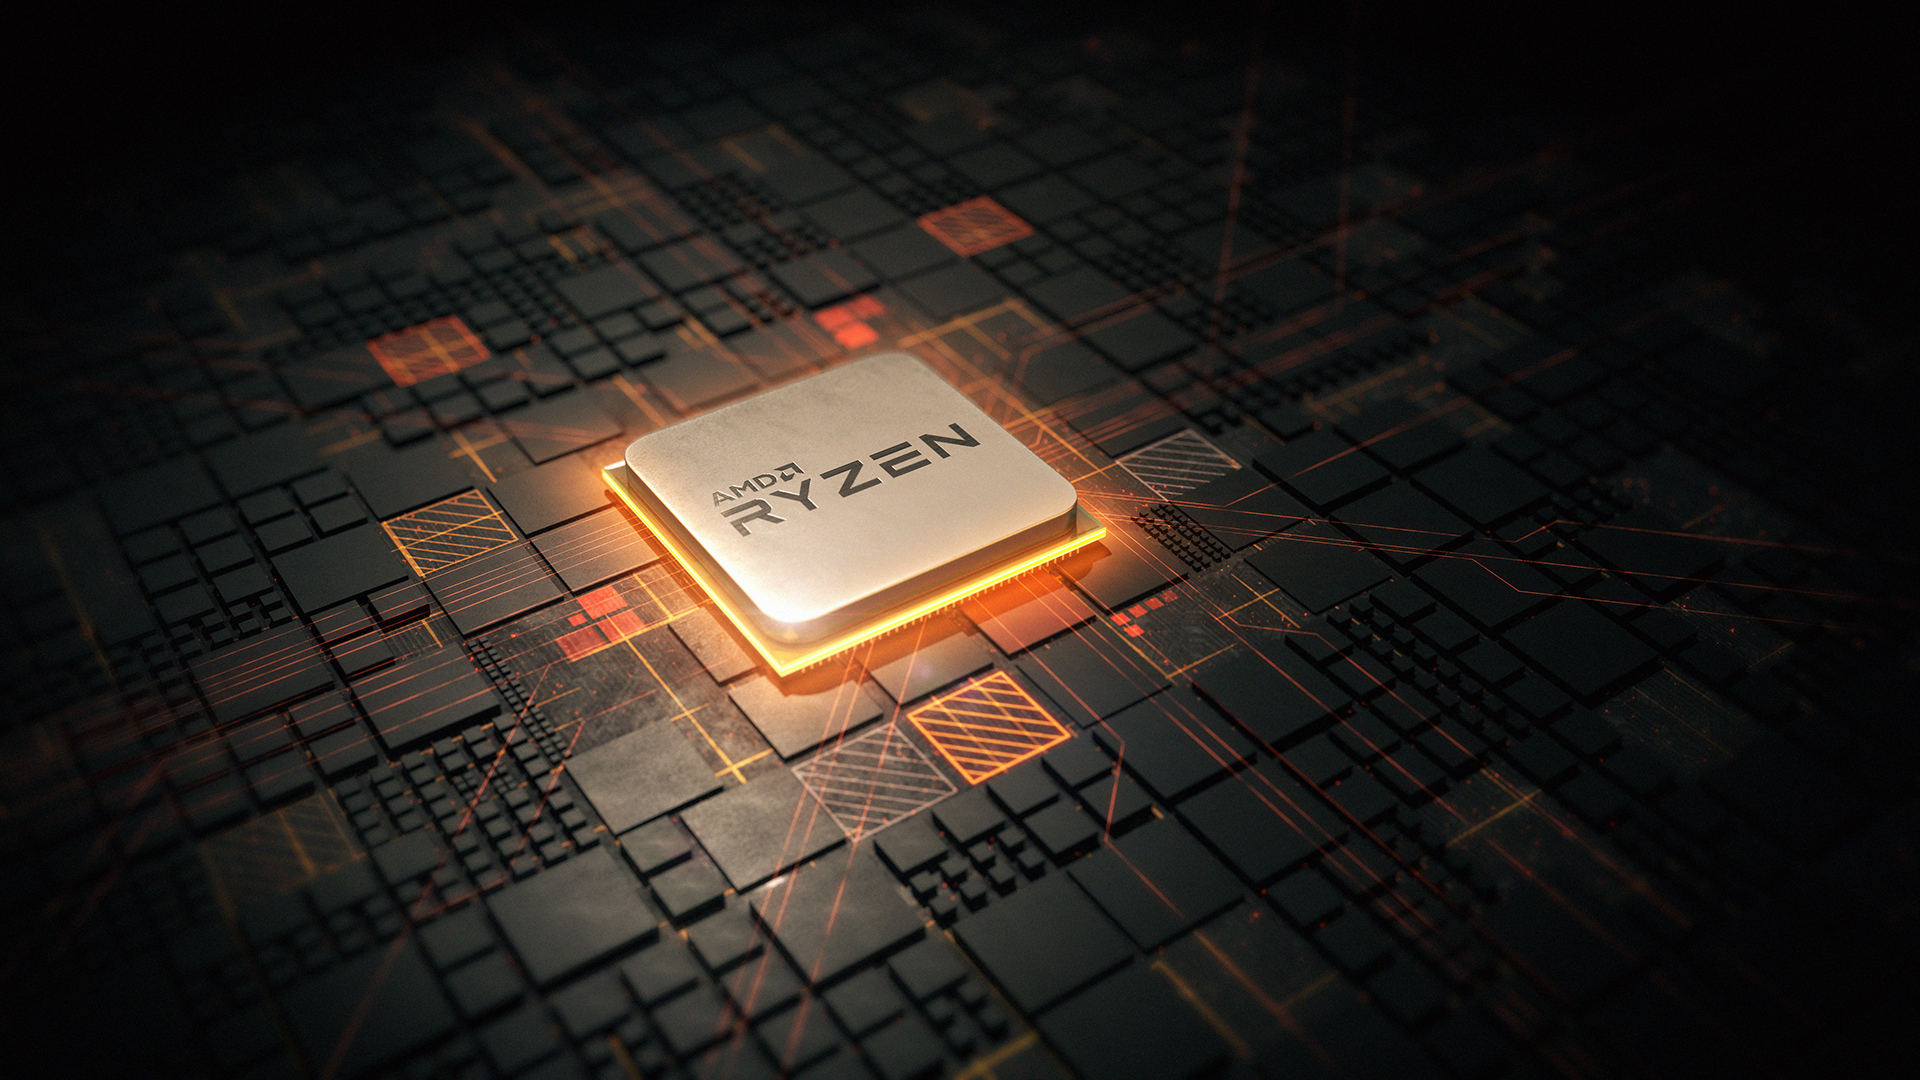 AMD ZEN3